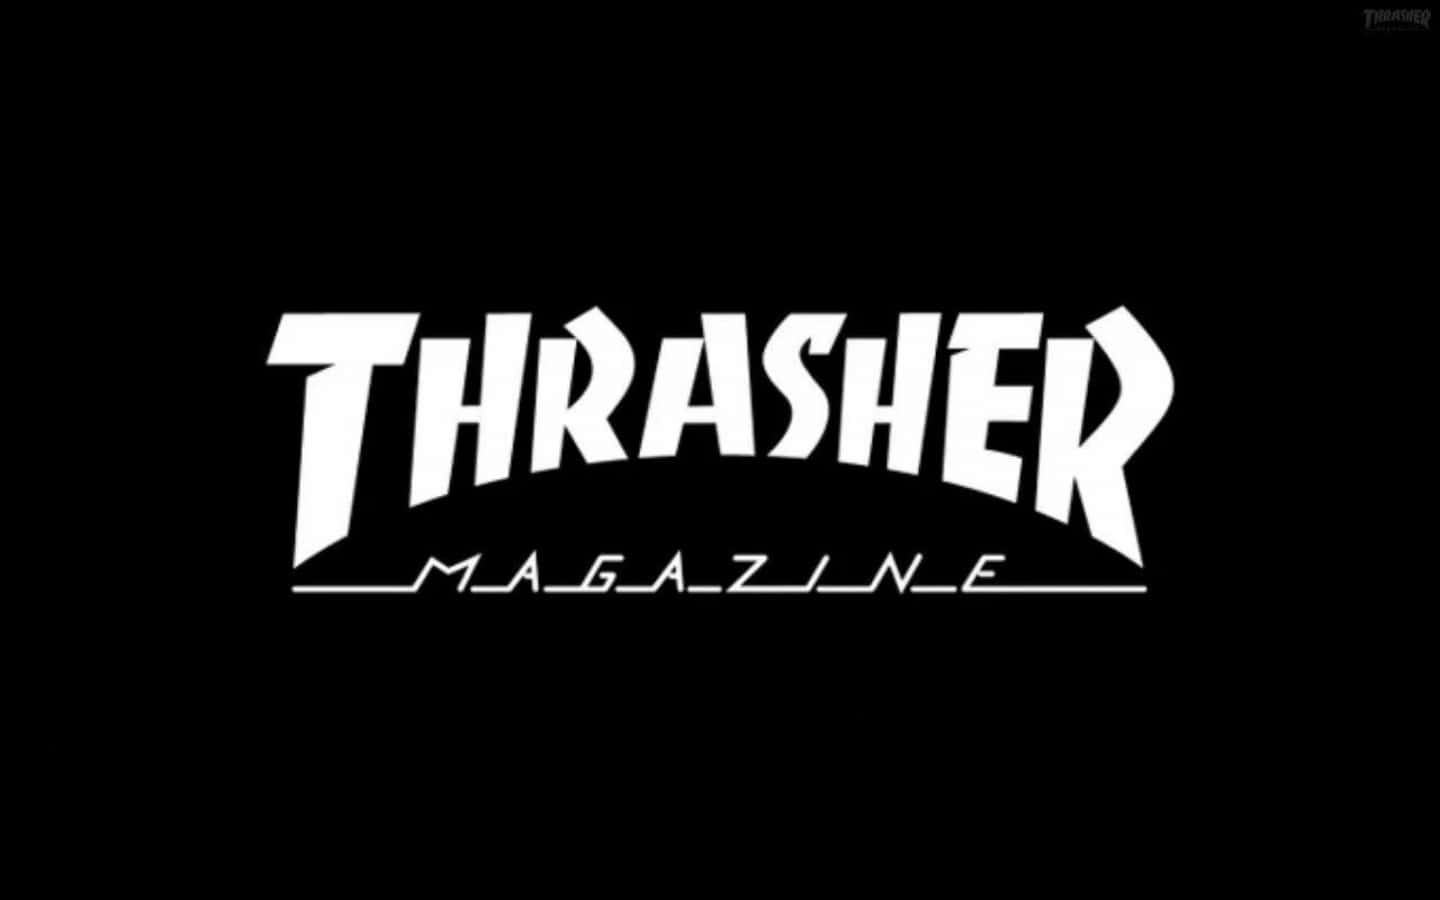 Thrashermagazin Logo Auf Schwarzem Hintergrund